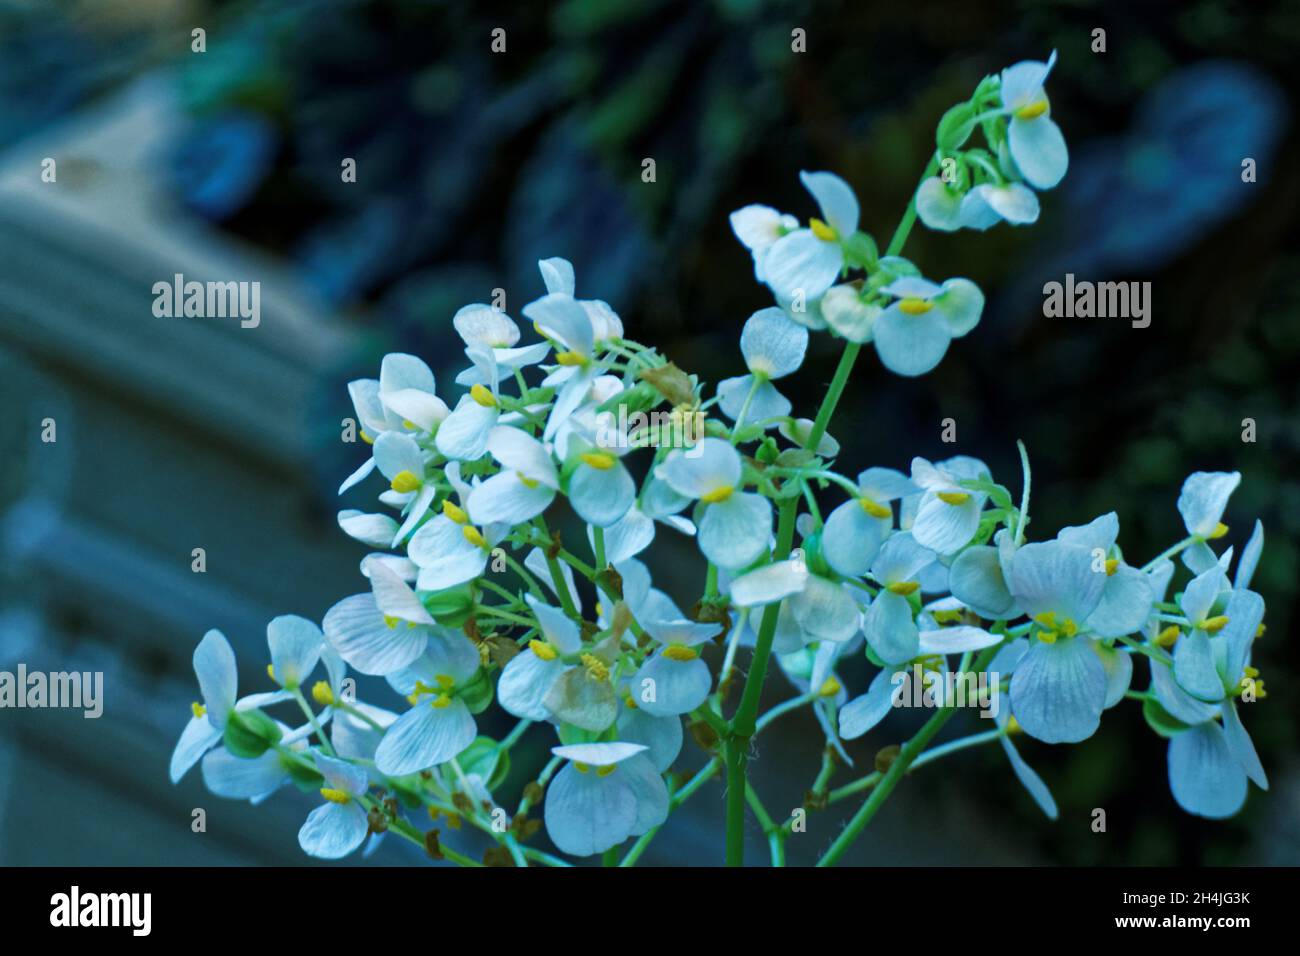 Photo plants Begonia, Stock Photo